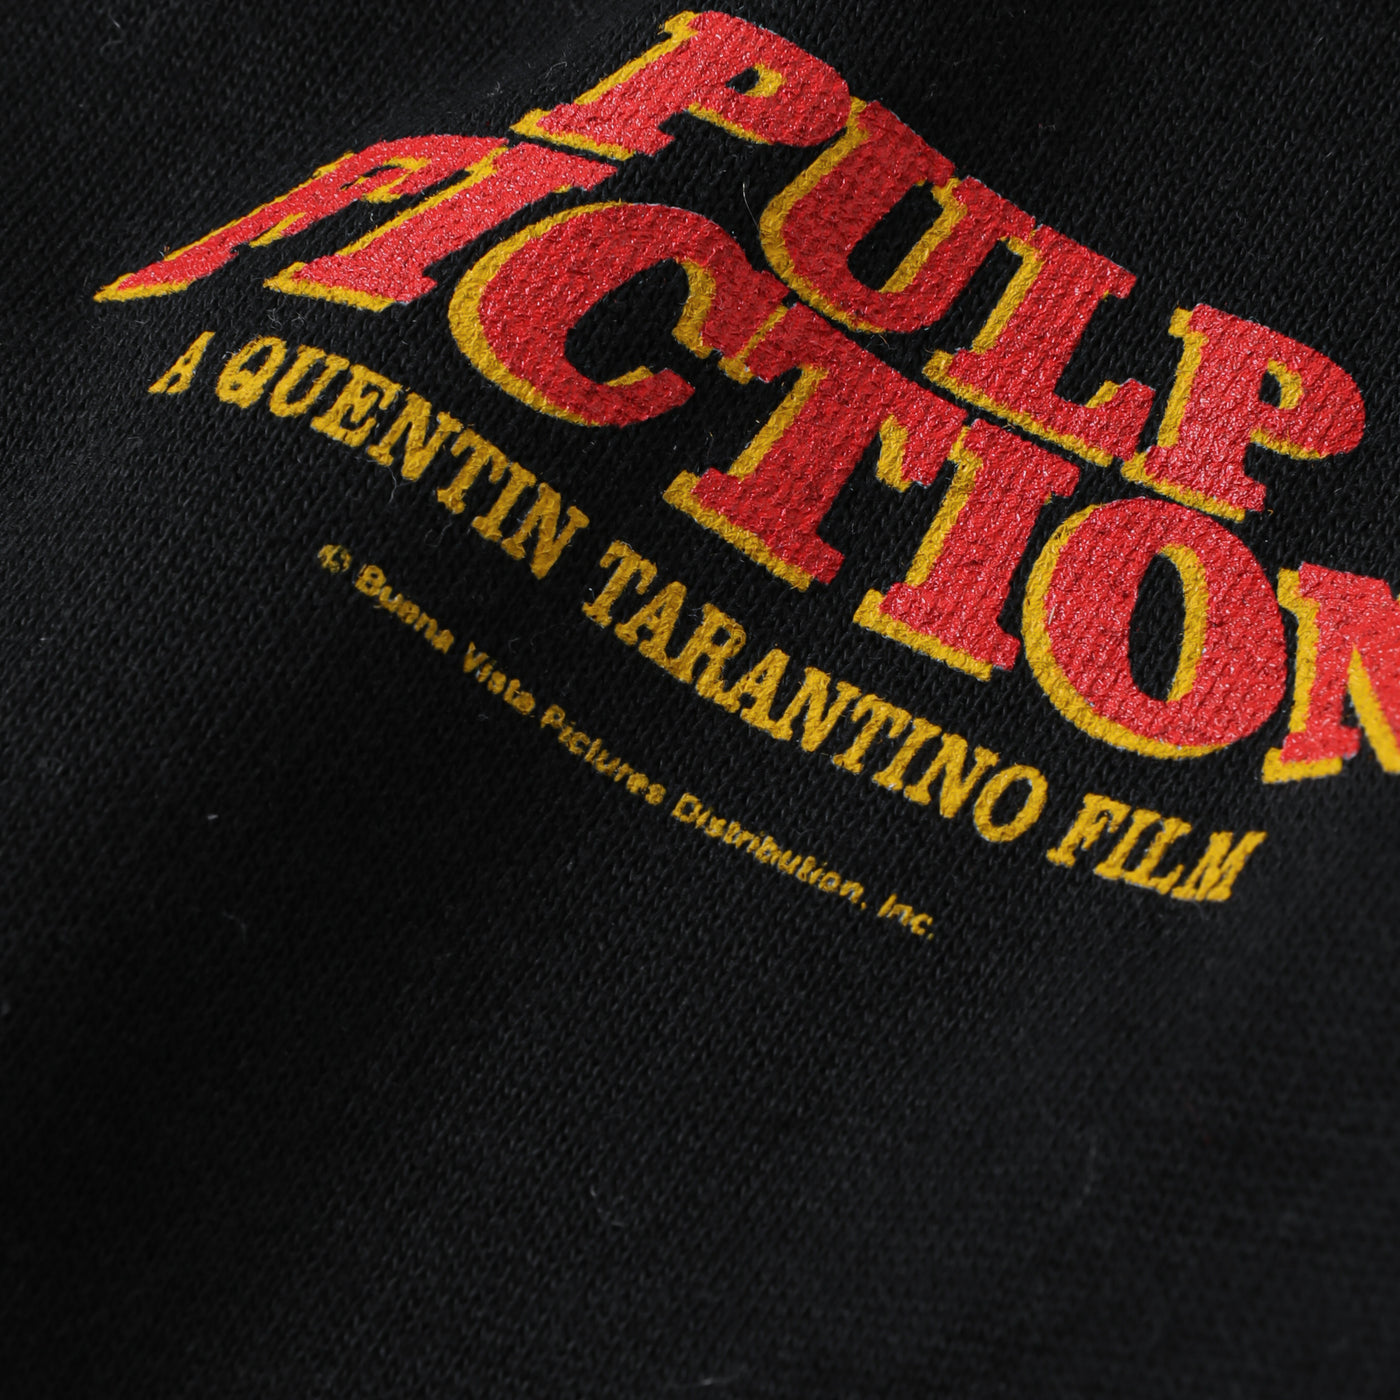 90s Pulp Fiction sweat